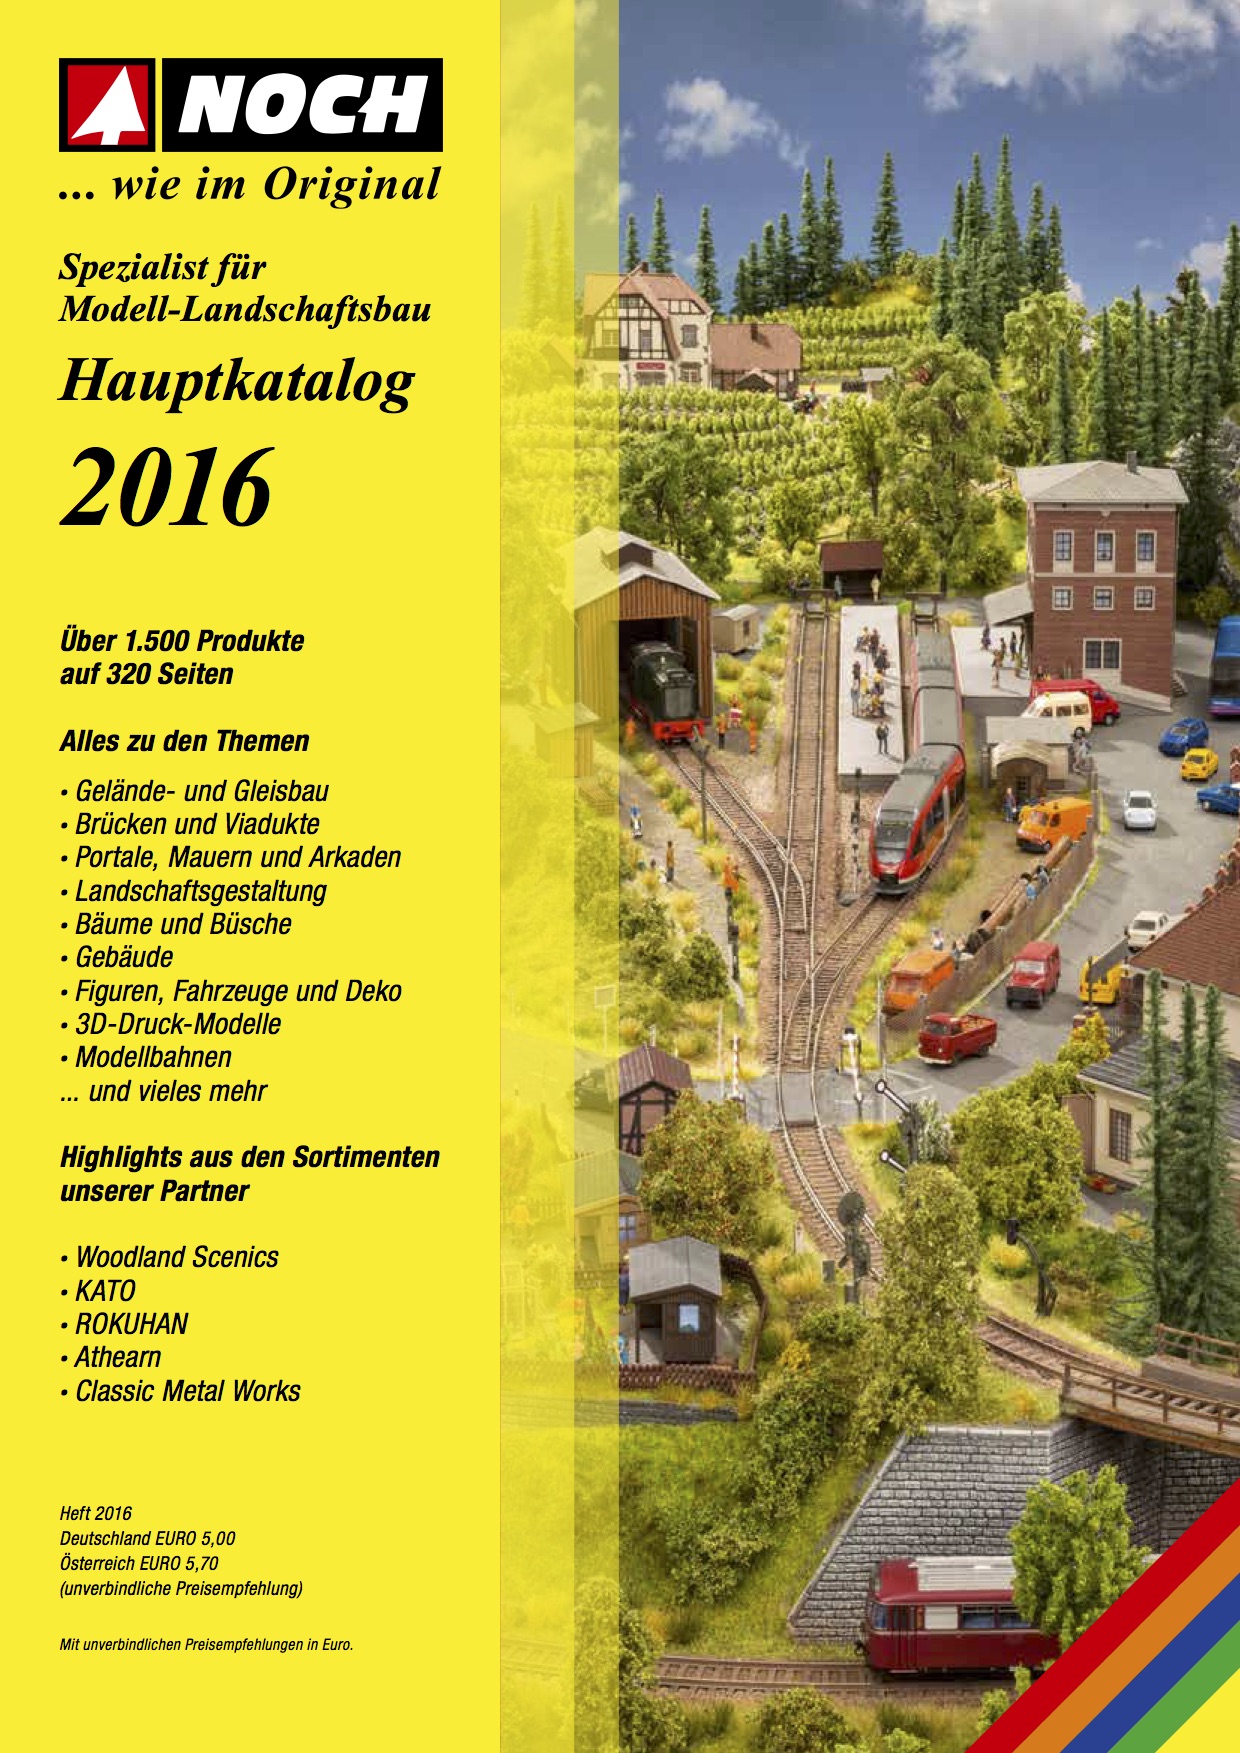 NOCH Katalog (Catalogue) 2016